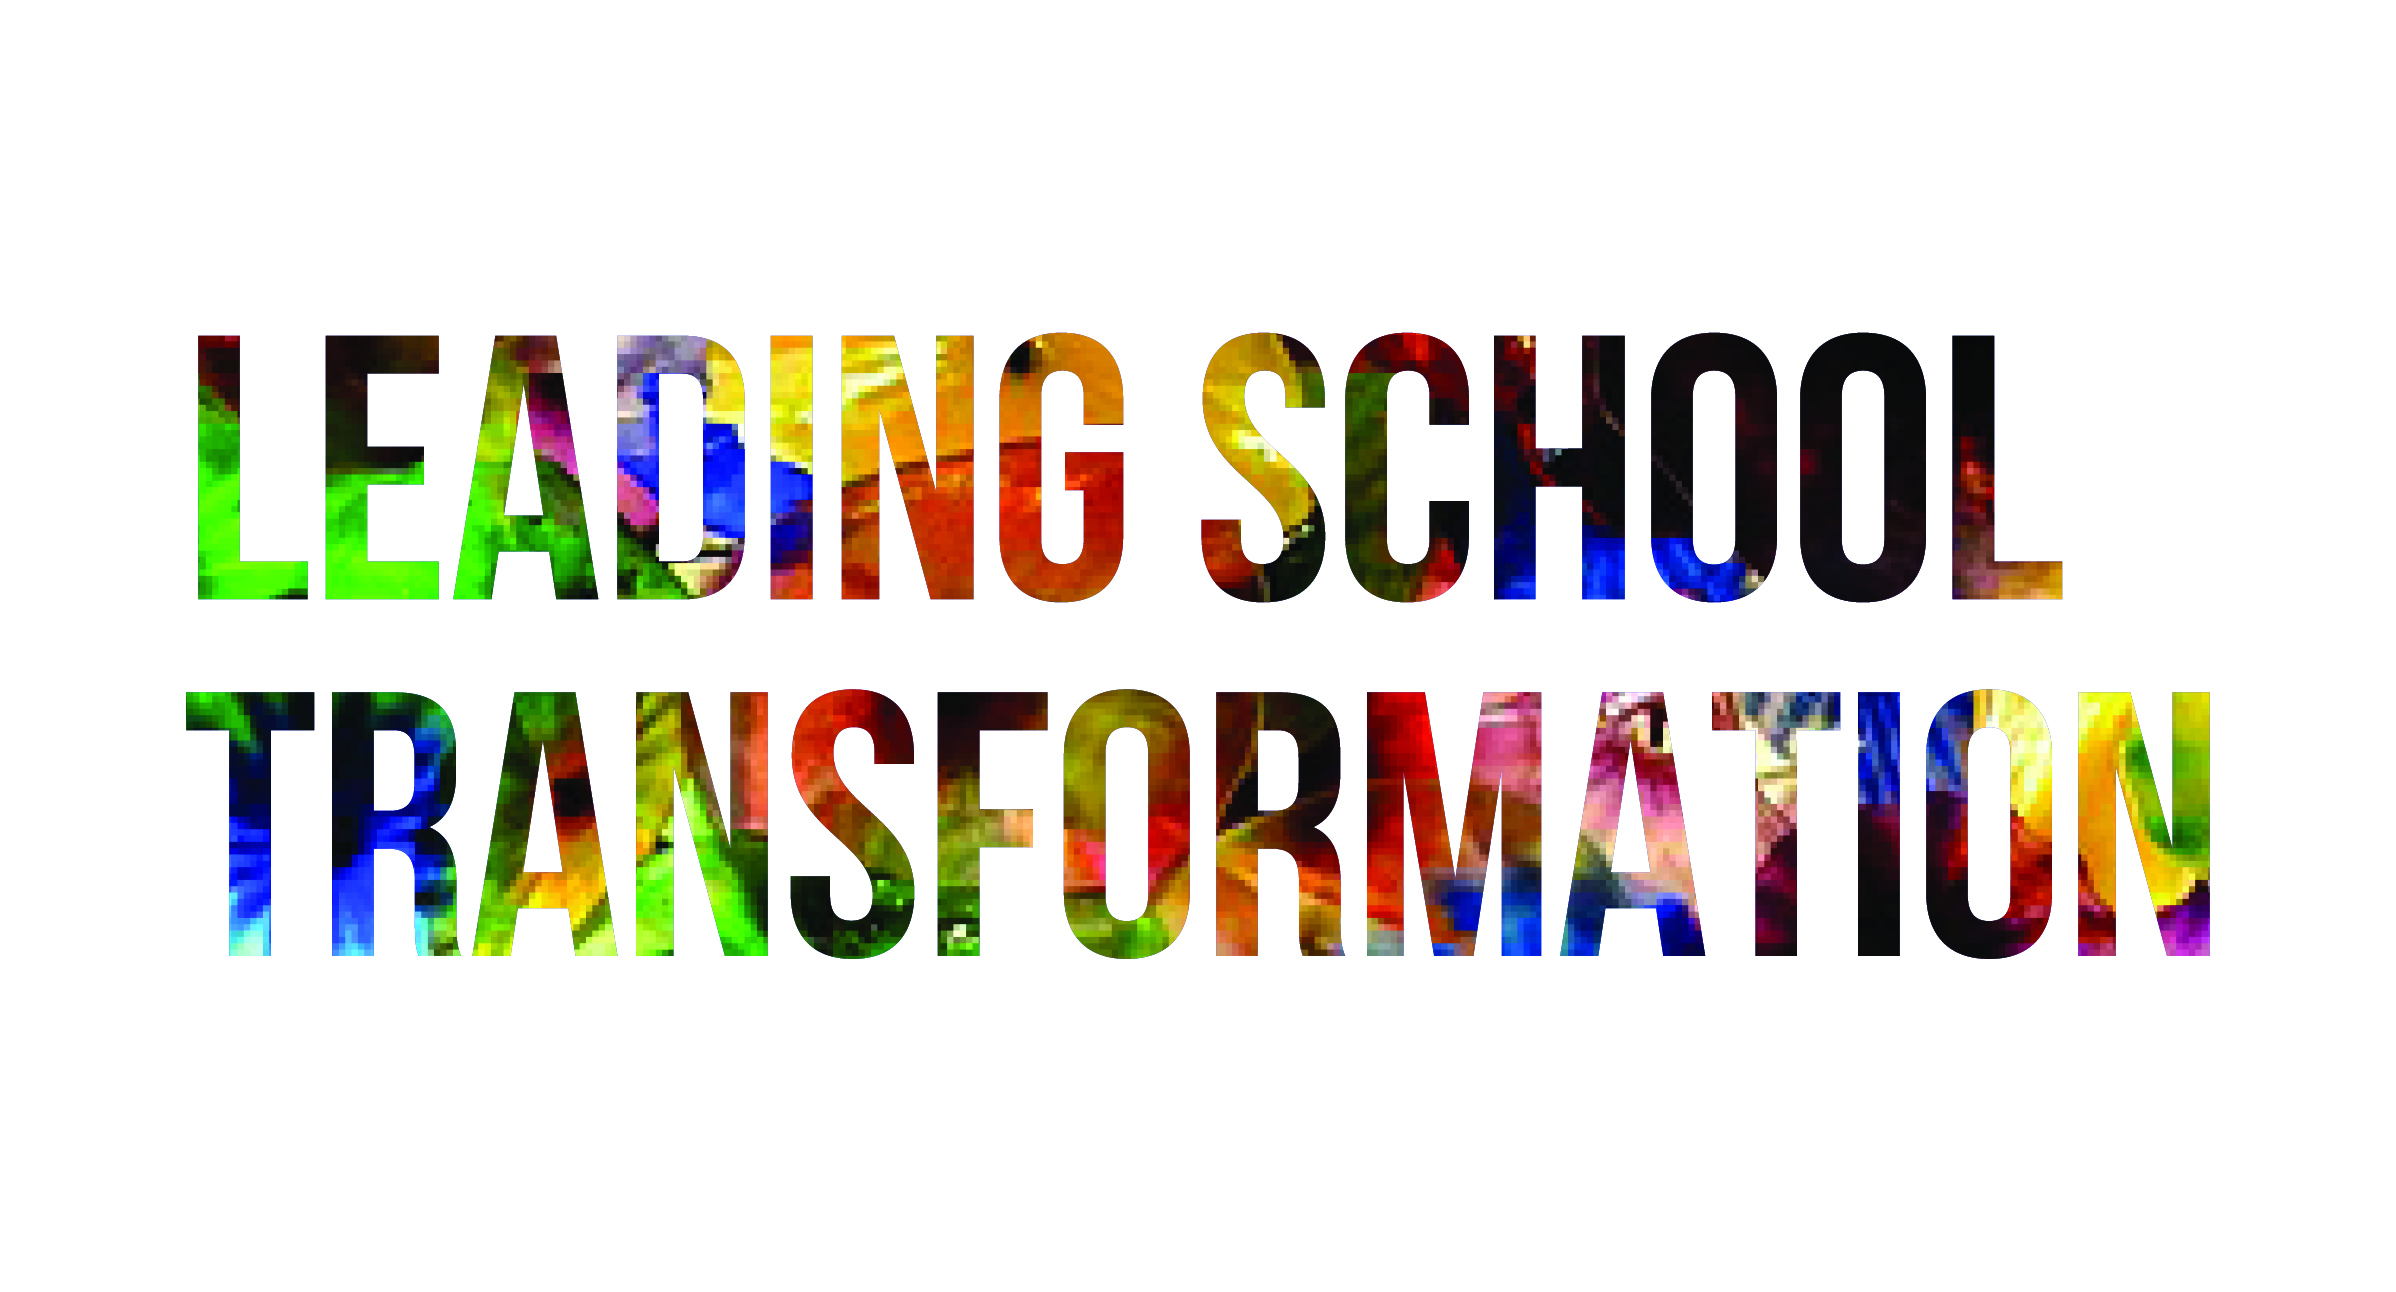 Leading School Transformation